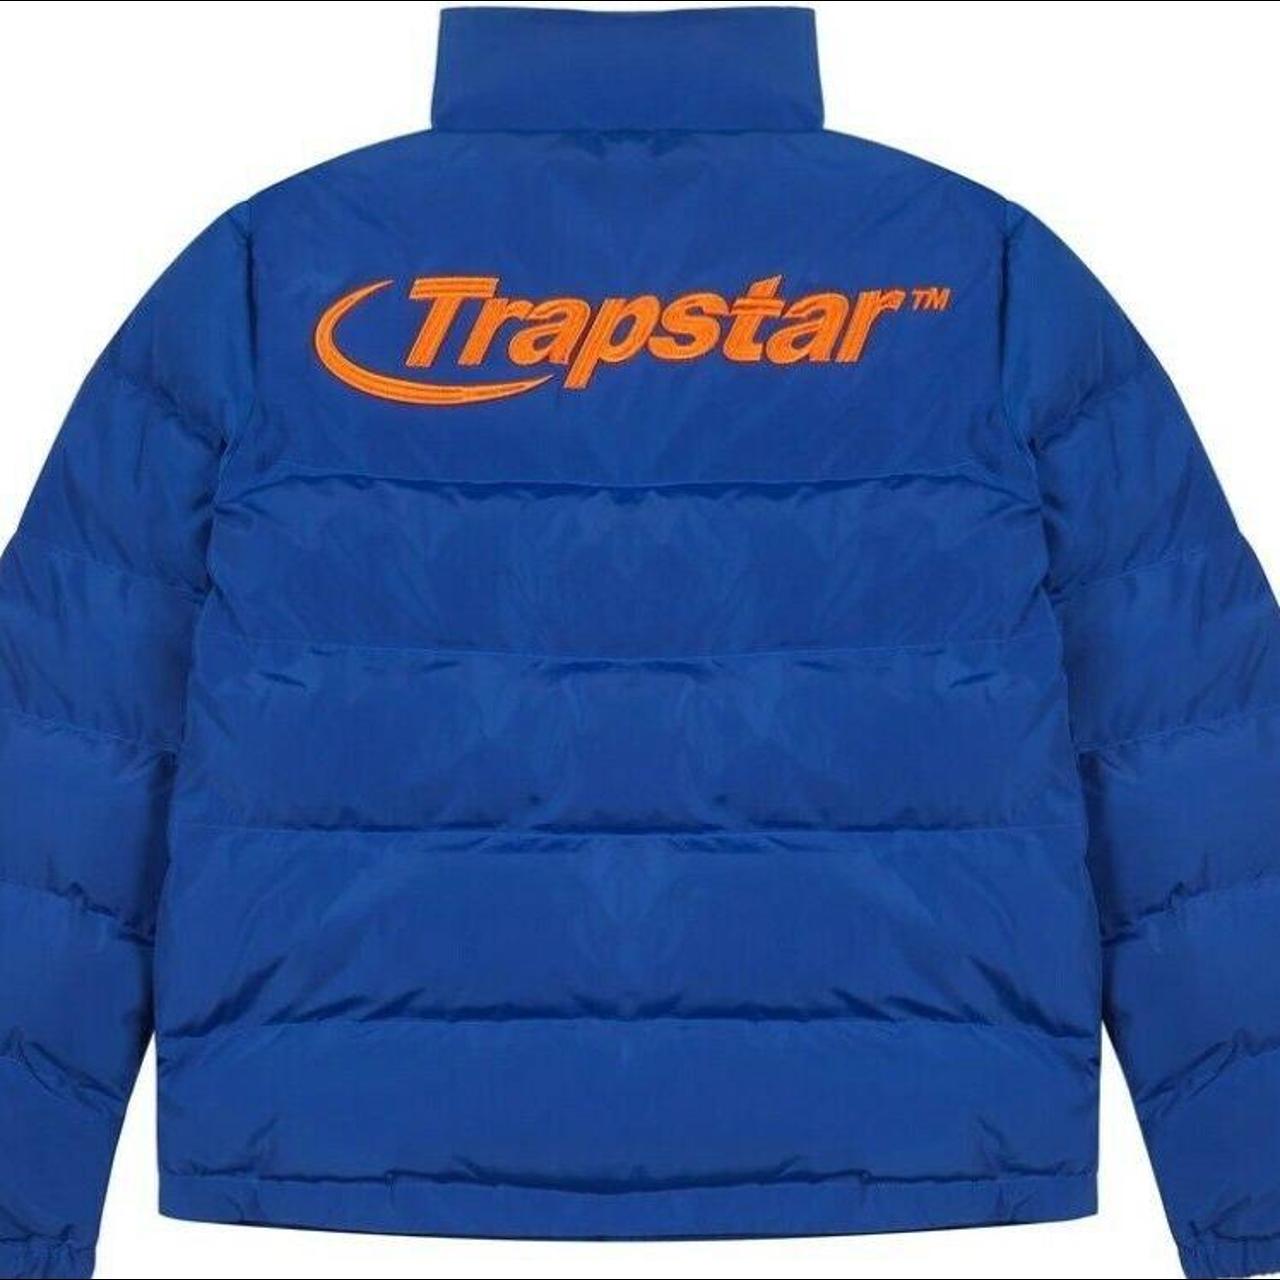 trapstar jacket , blue and orange, size S, brand...